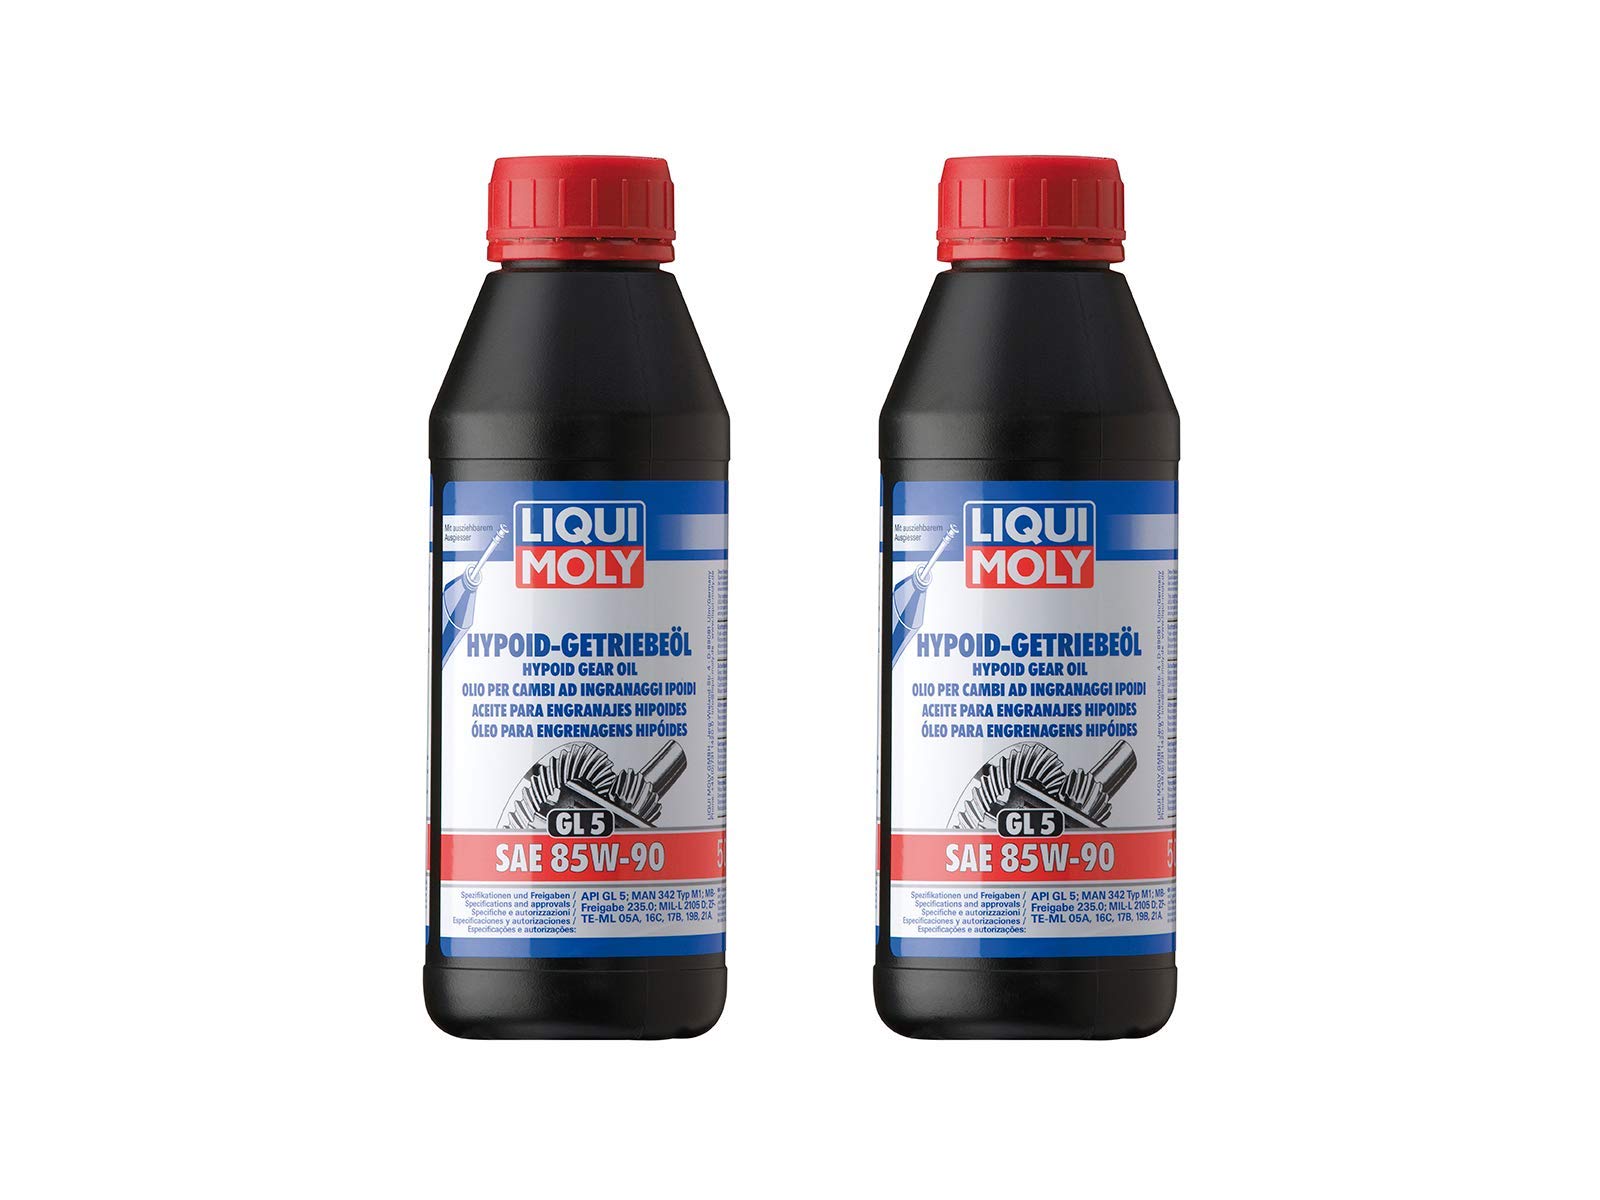 ILODA 2X Original Liqui Moly 500ml Hypoid-Getriebeöl (GL5) SAE 85W-90 Gear Oil 1404 von ILODA